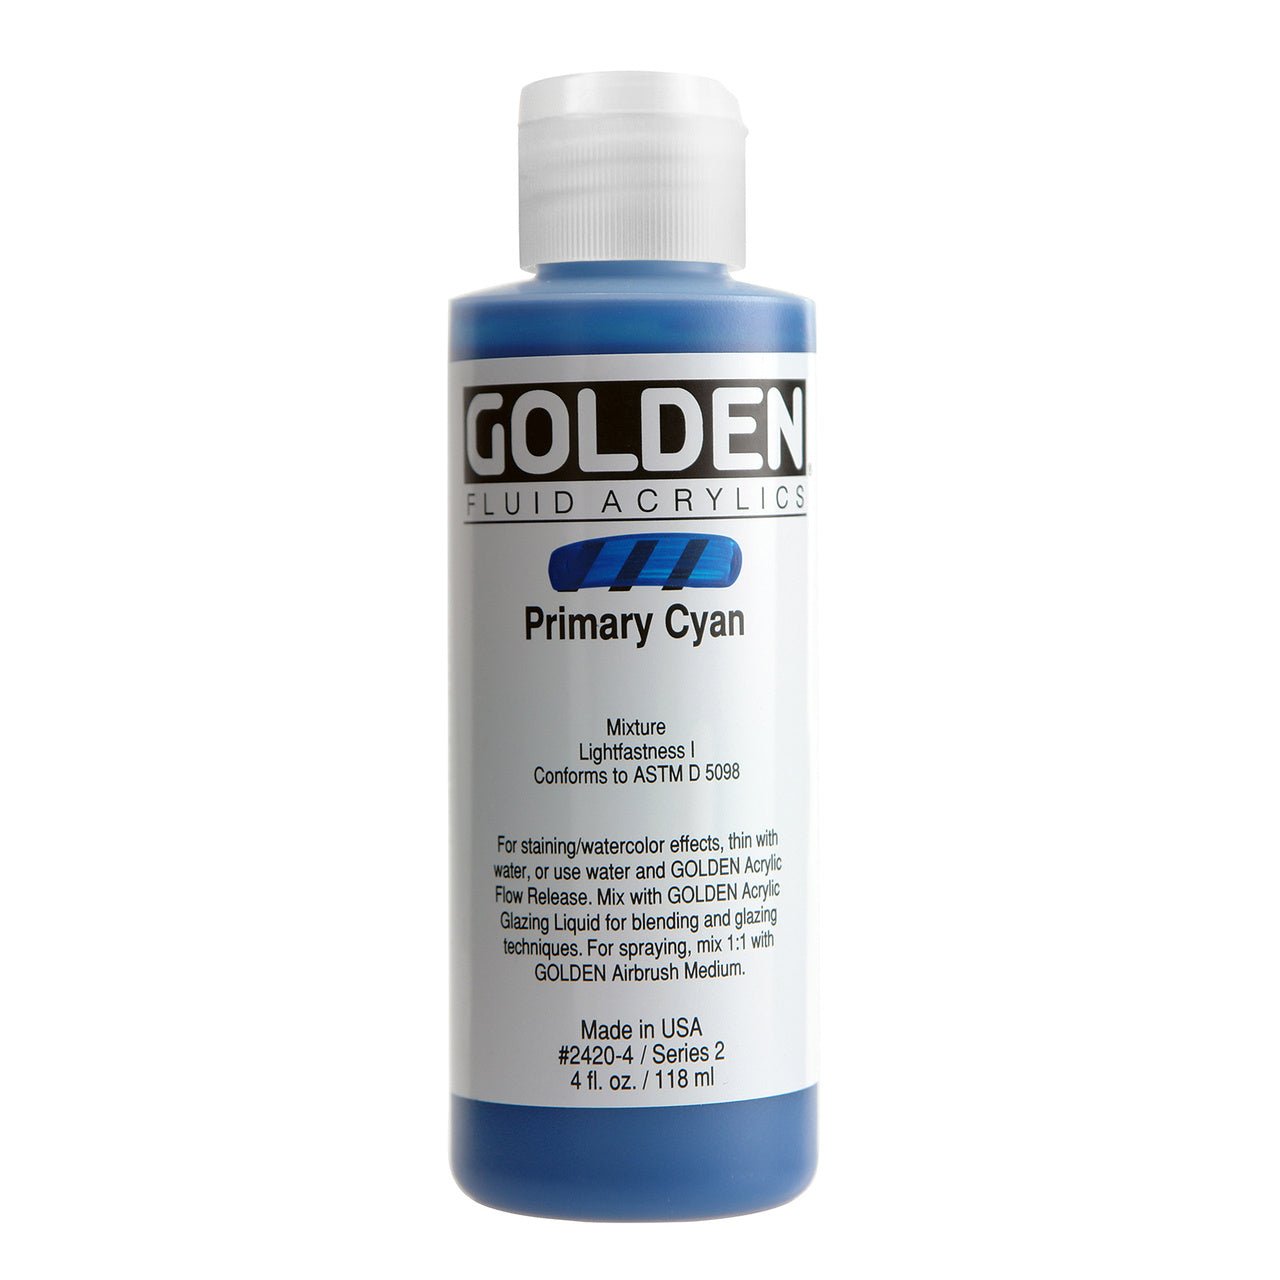 Golden Fluid Acrylic Primary Cyan 4 oz - merriartist.com